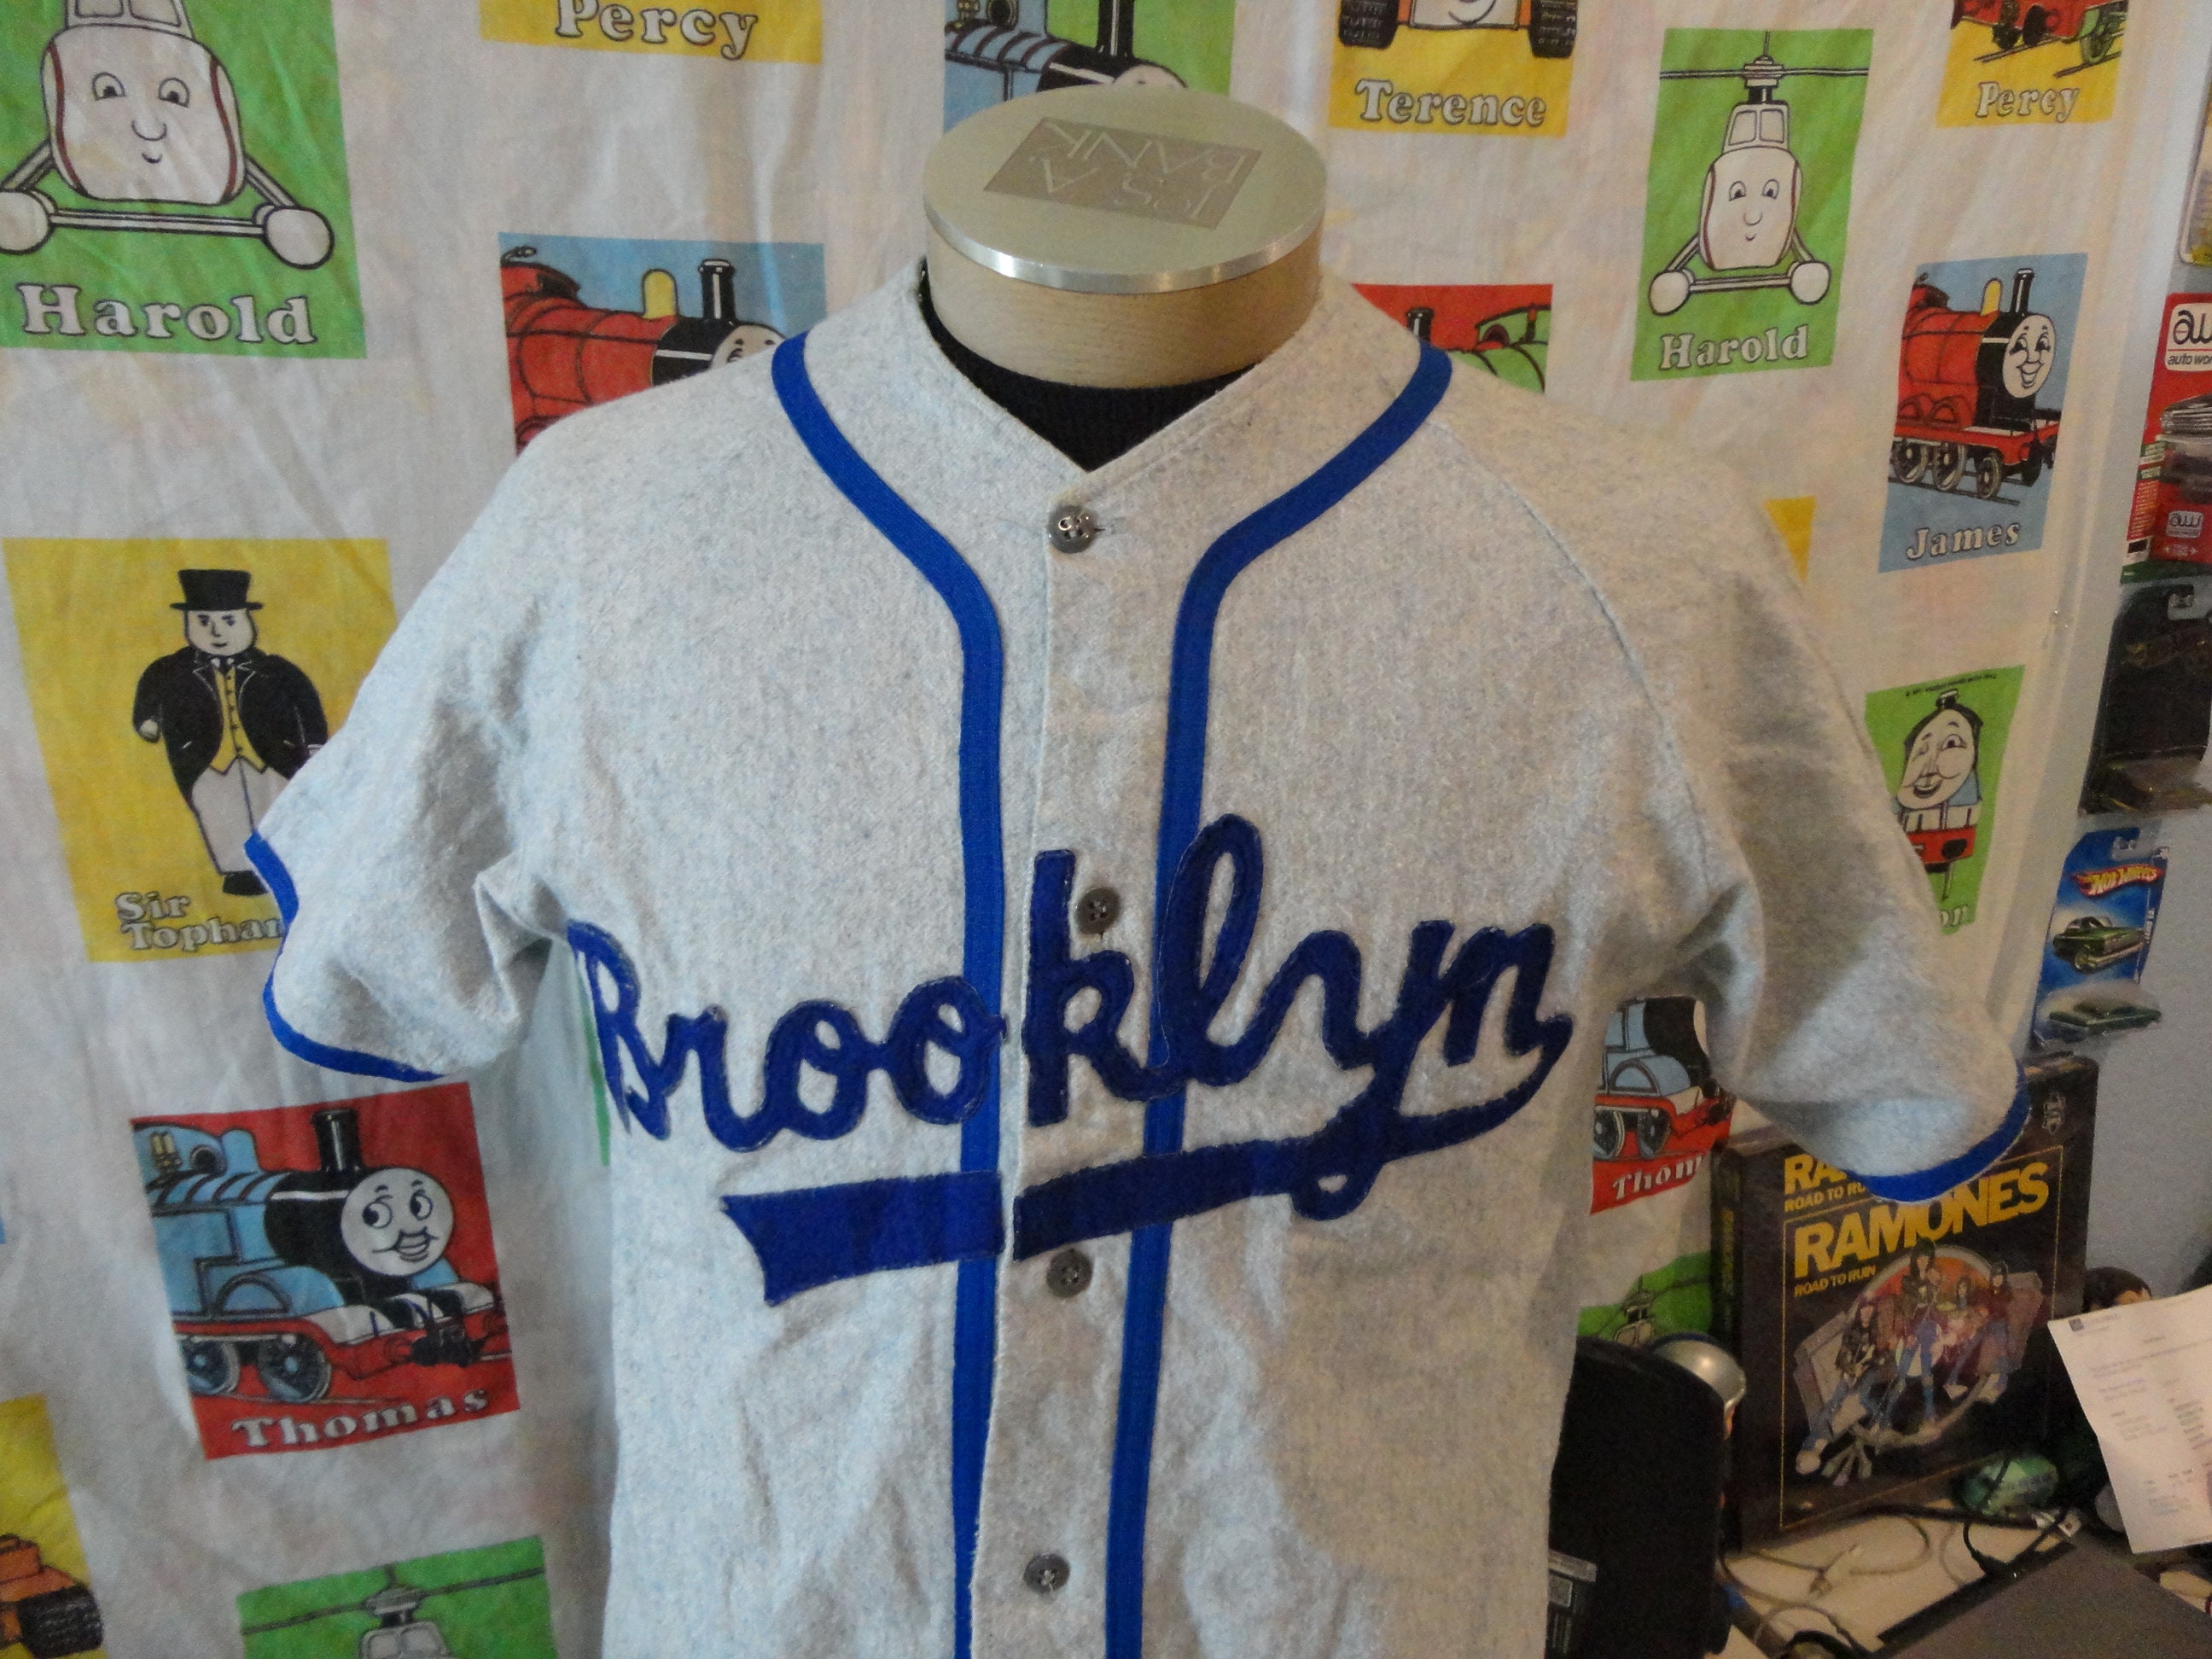 Vintage Brooklyn Dodgers Cotton MLB Baseball Empire Jersey L 